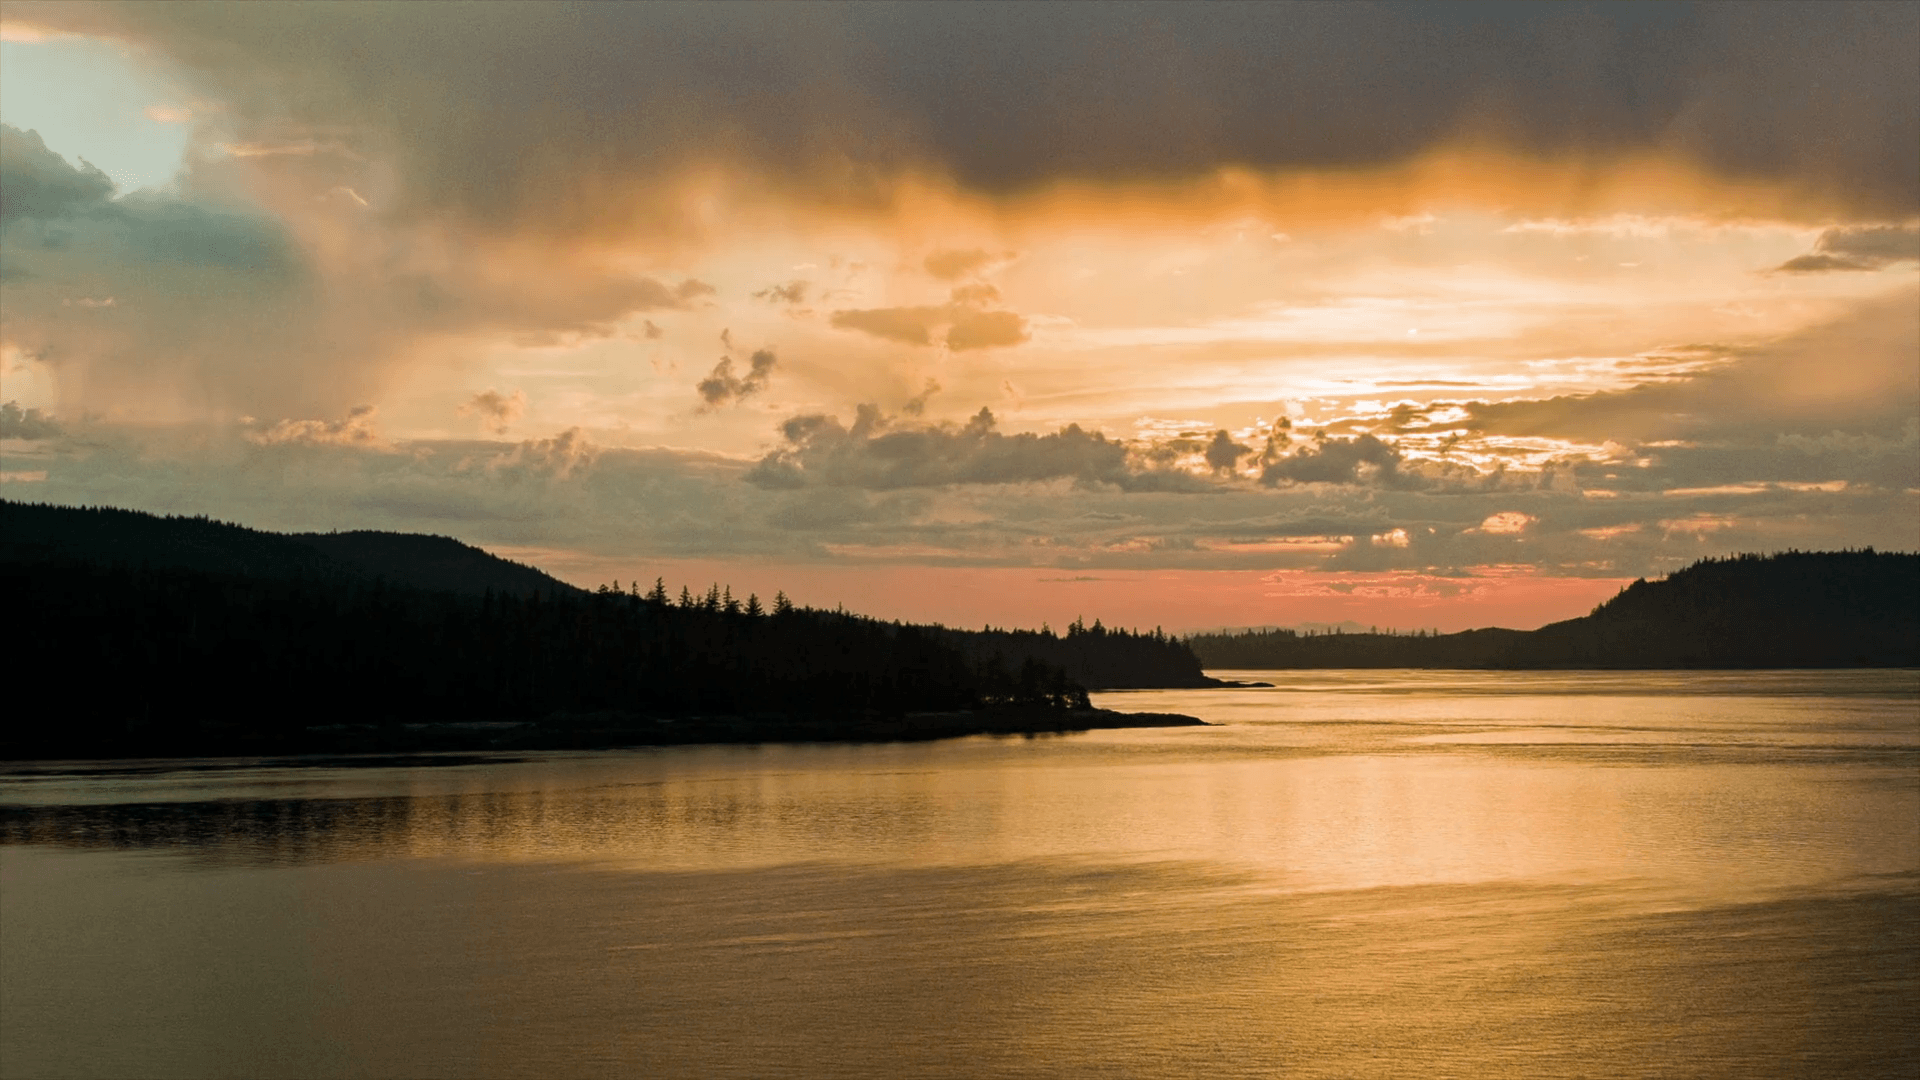 Golden Alaska Sunset Sunrise Landscape At Sea featuring an Epic